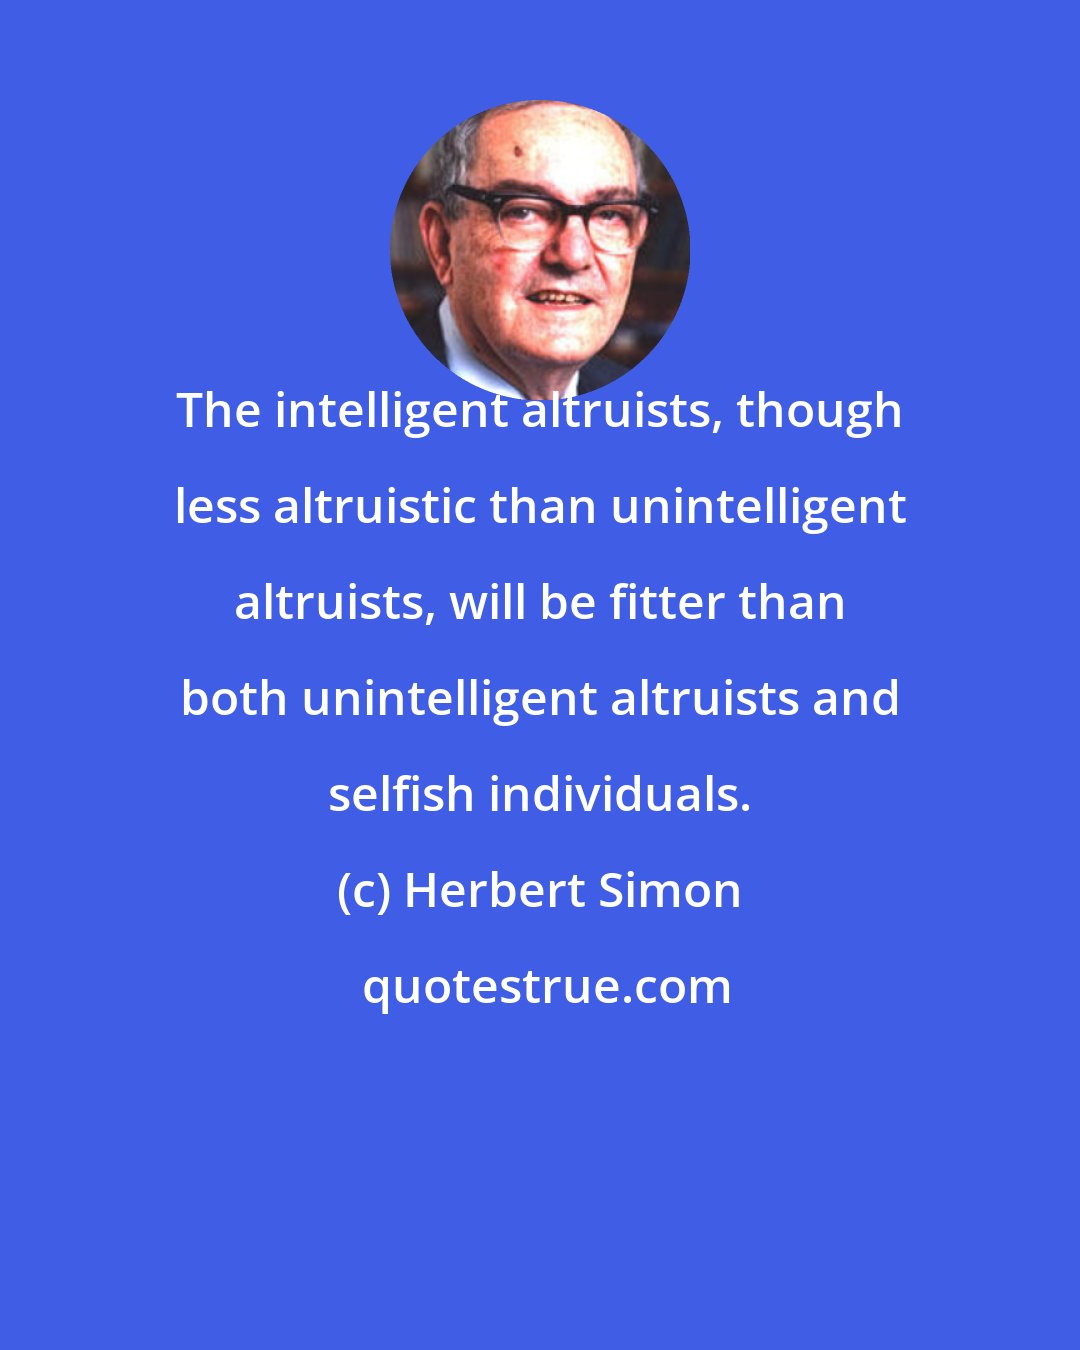 Herbert Simon: The intelligent altruists, though less altruistic than unintelligent altruists, will be fitter than both unintelligent altruists and selfish individuals.